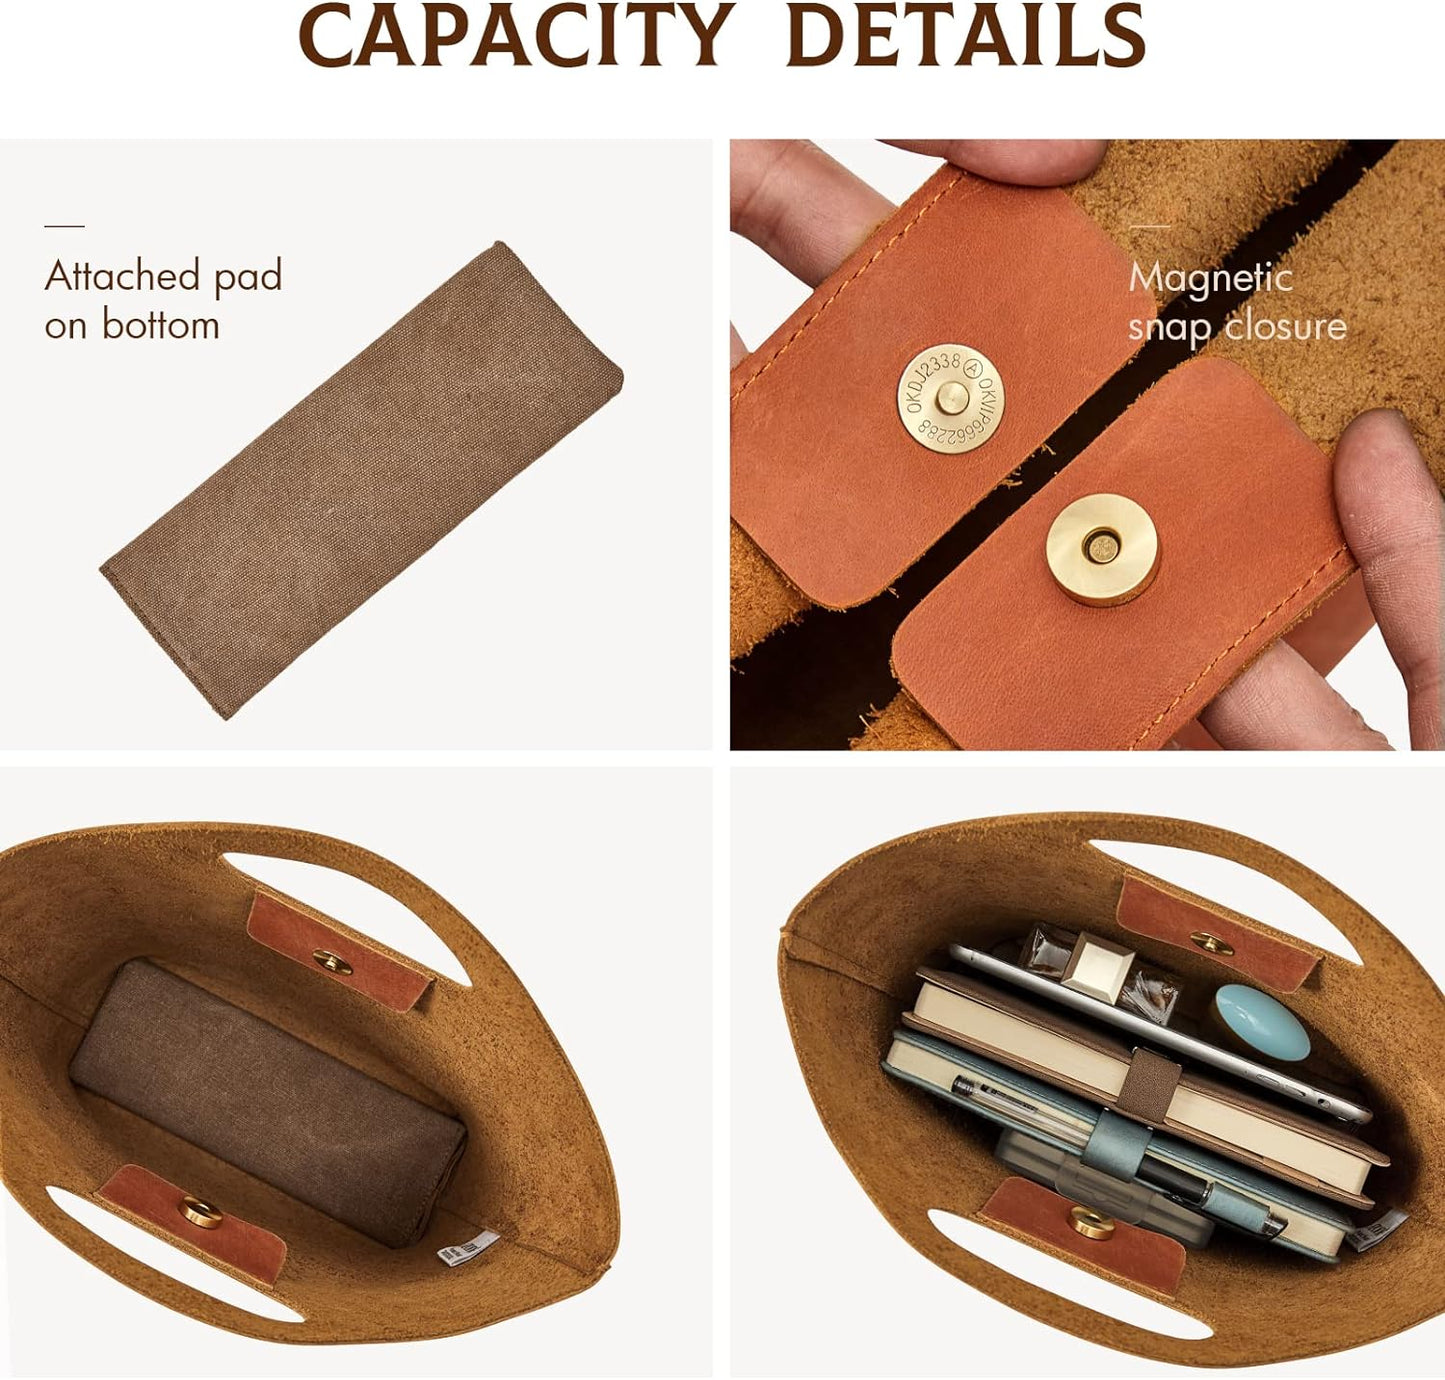 S-ZONE Minimalist Clutch Purses for Women Genuine Top Grain Leather